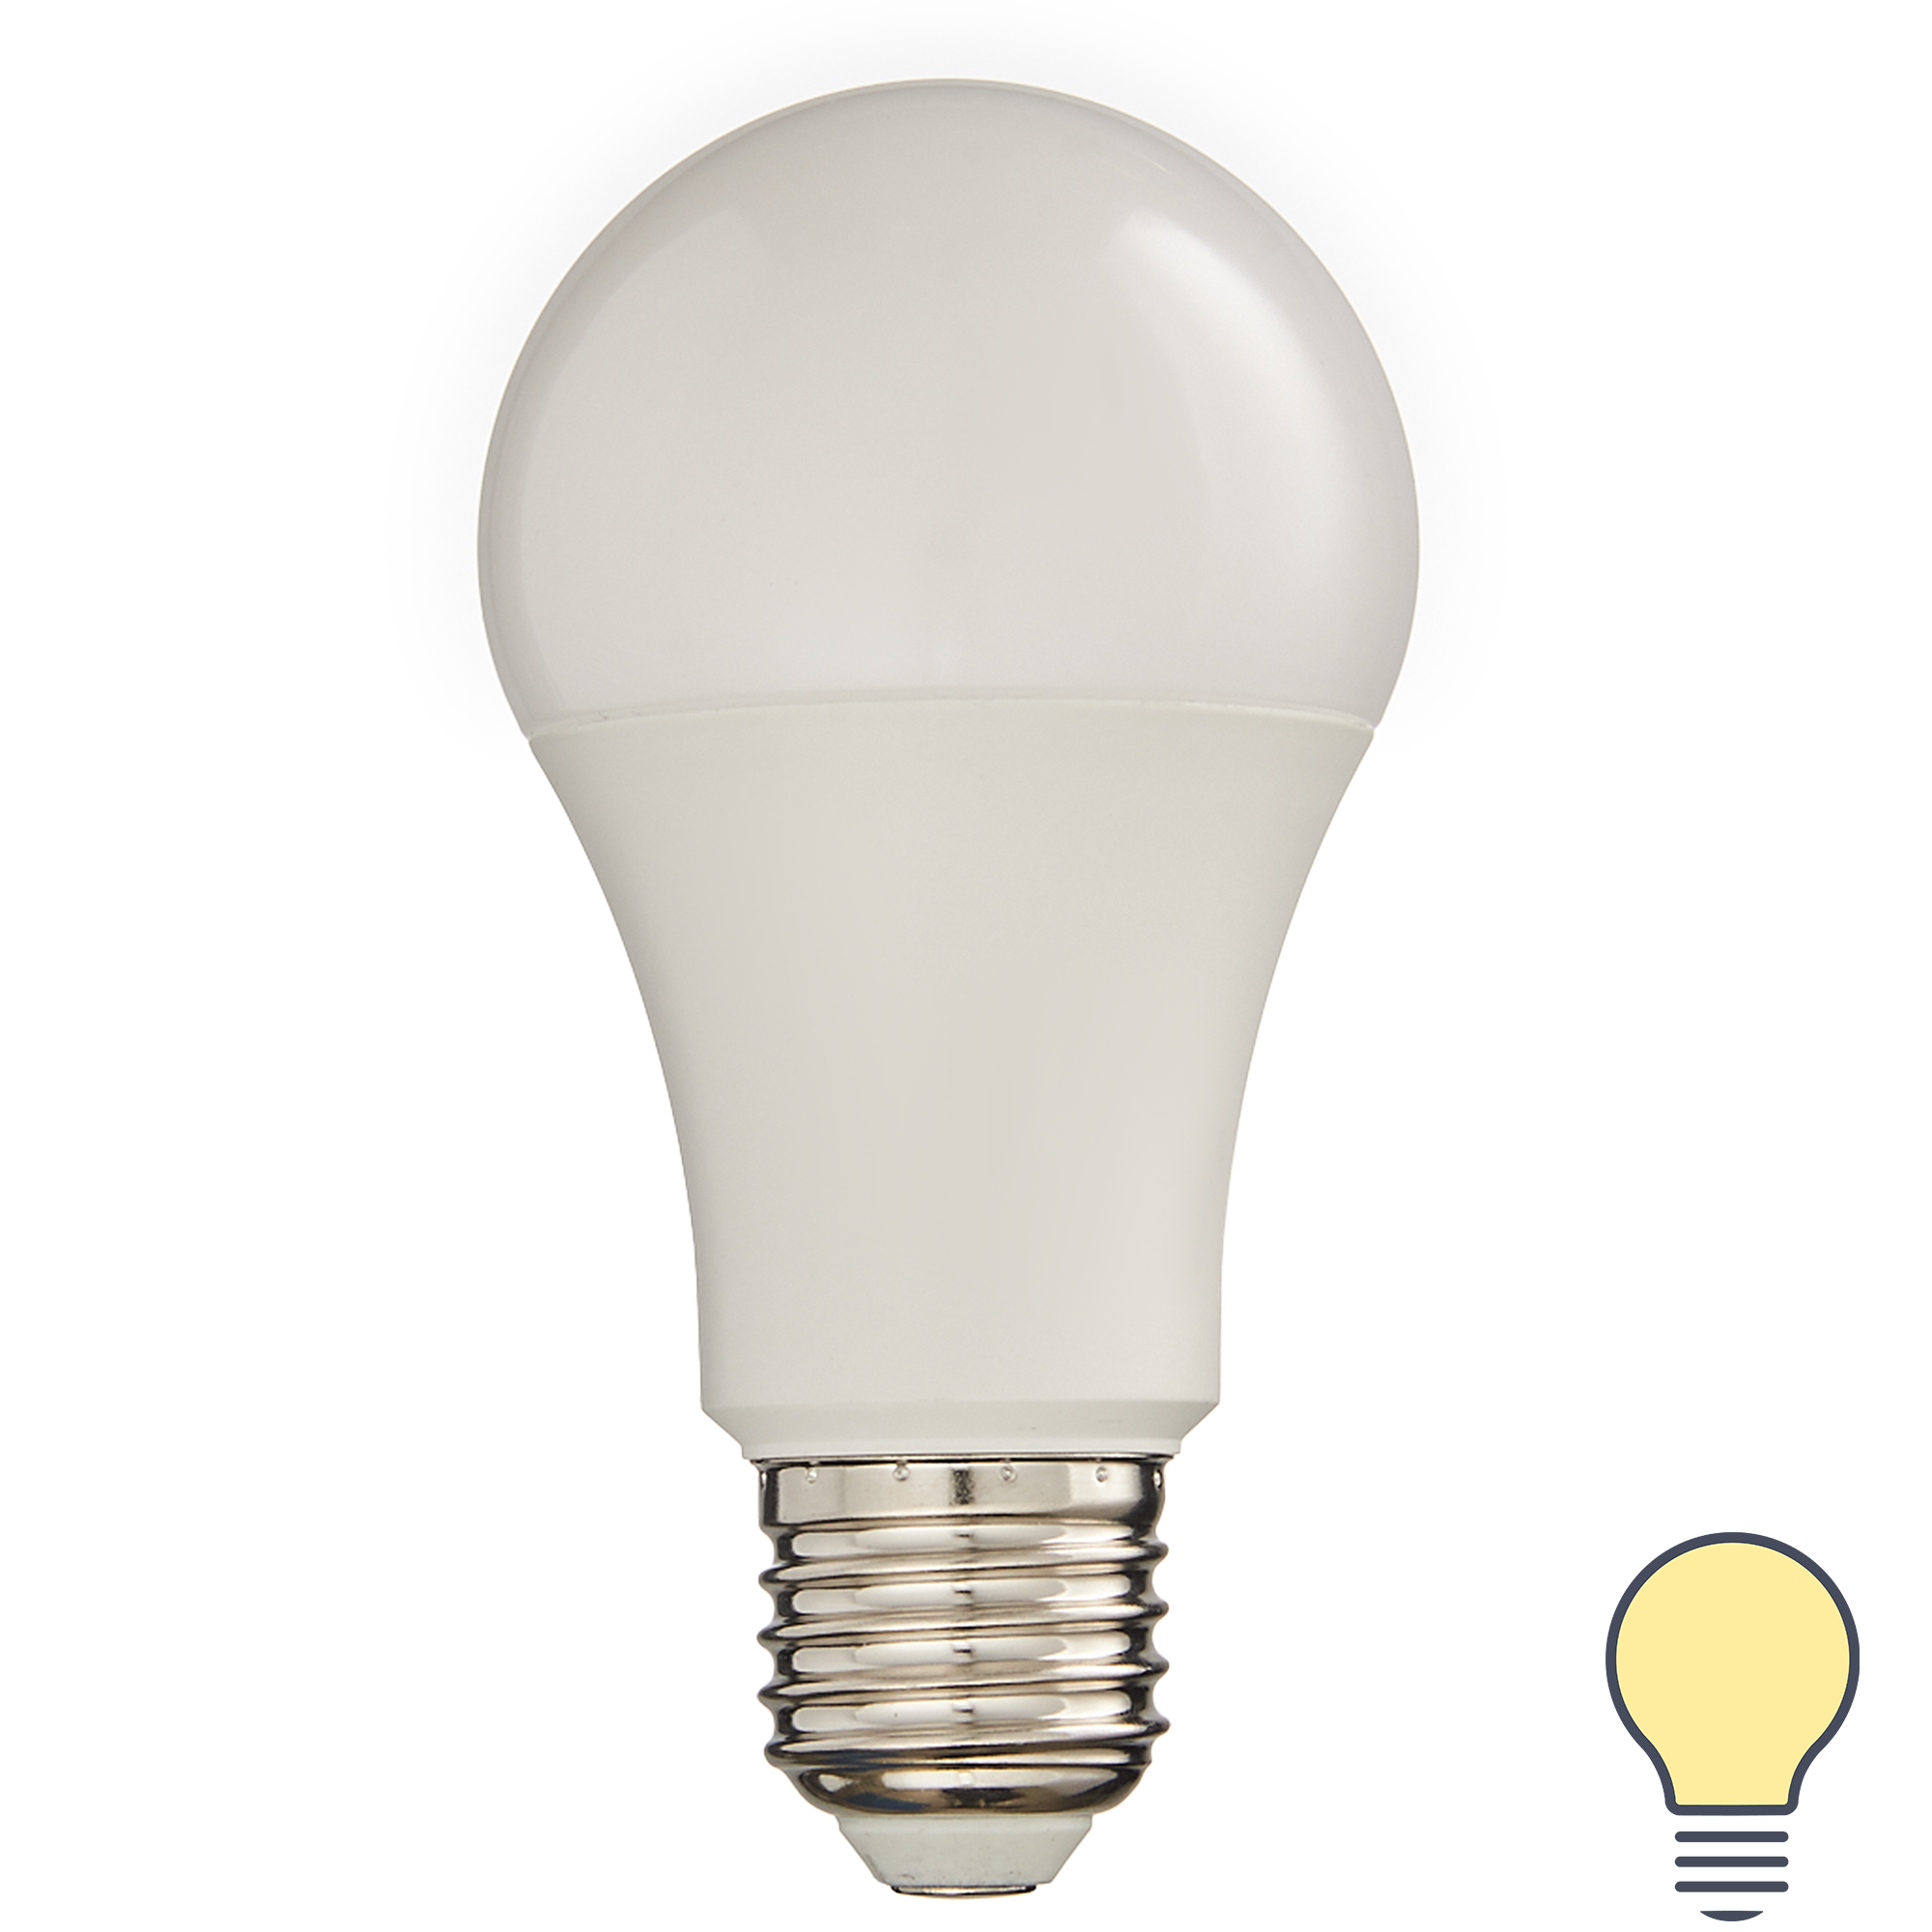 88110821 Лампа умная светодиодная Wi-Fi Smart Plus E27 220-240 В 9 Вт груша матовая 806 лм теплый белый свет STLM-0076895 LEDVANCE